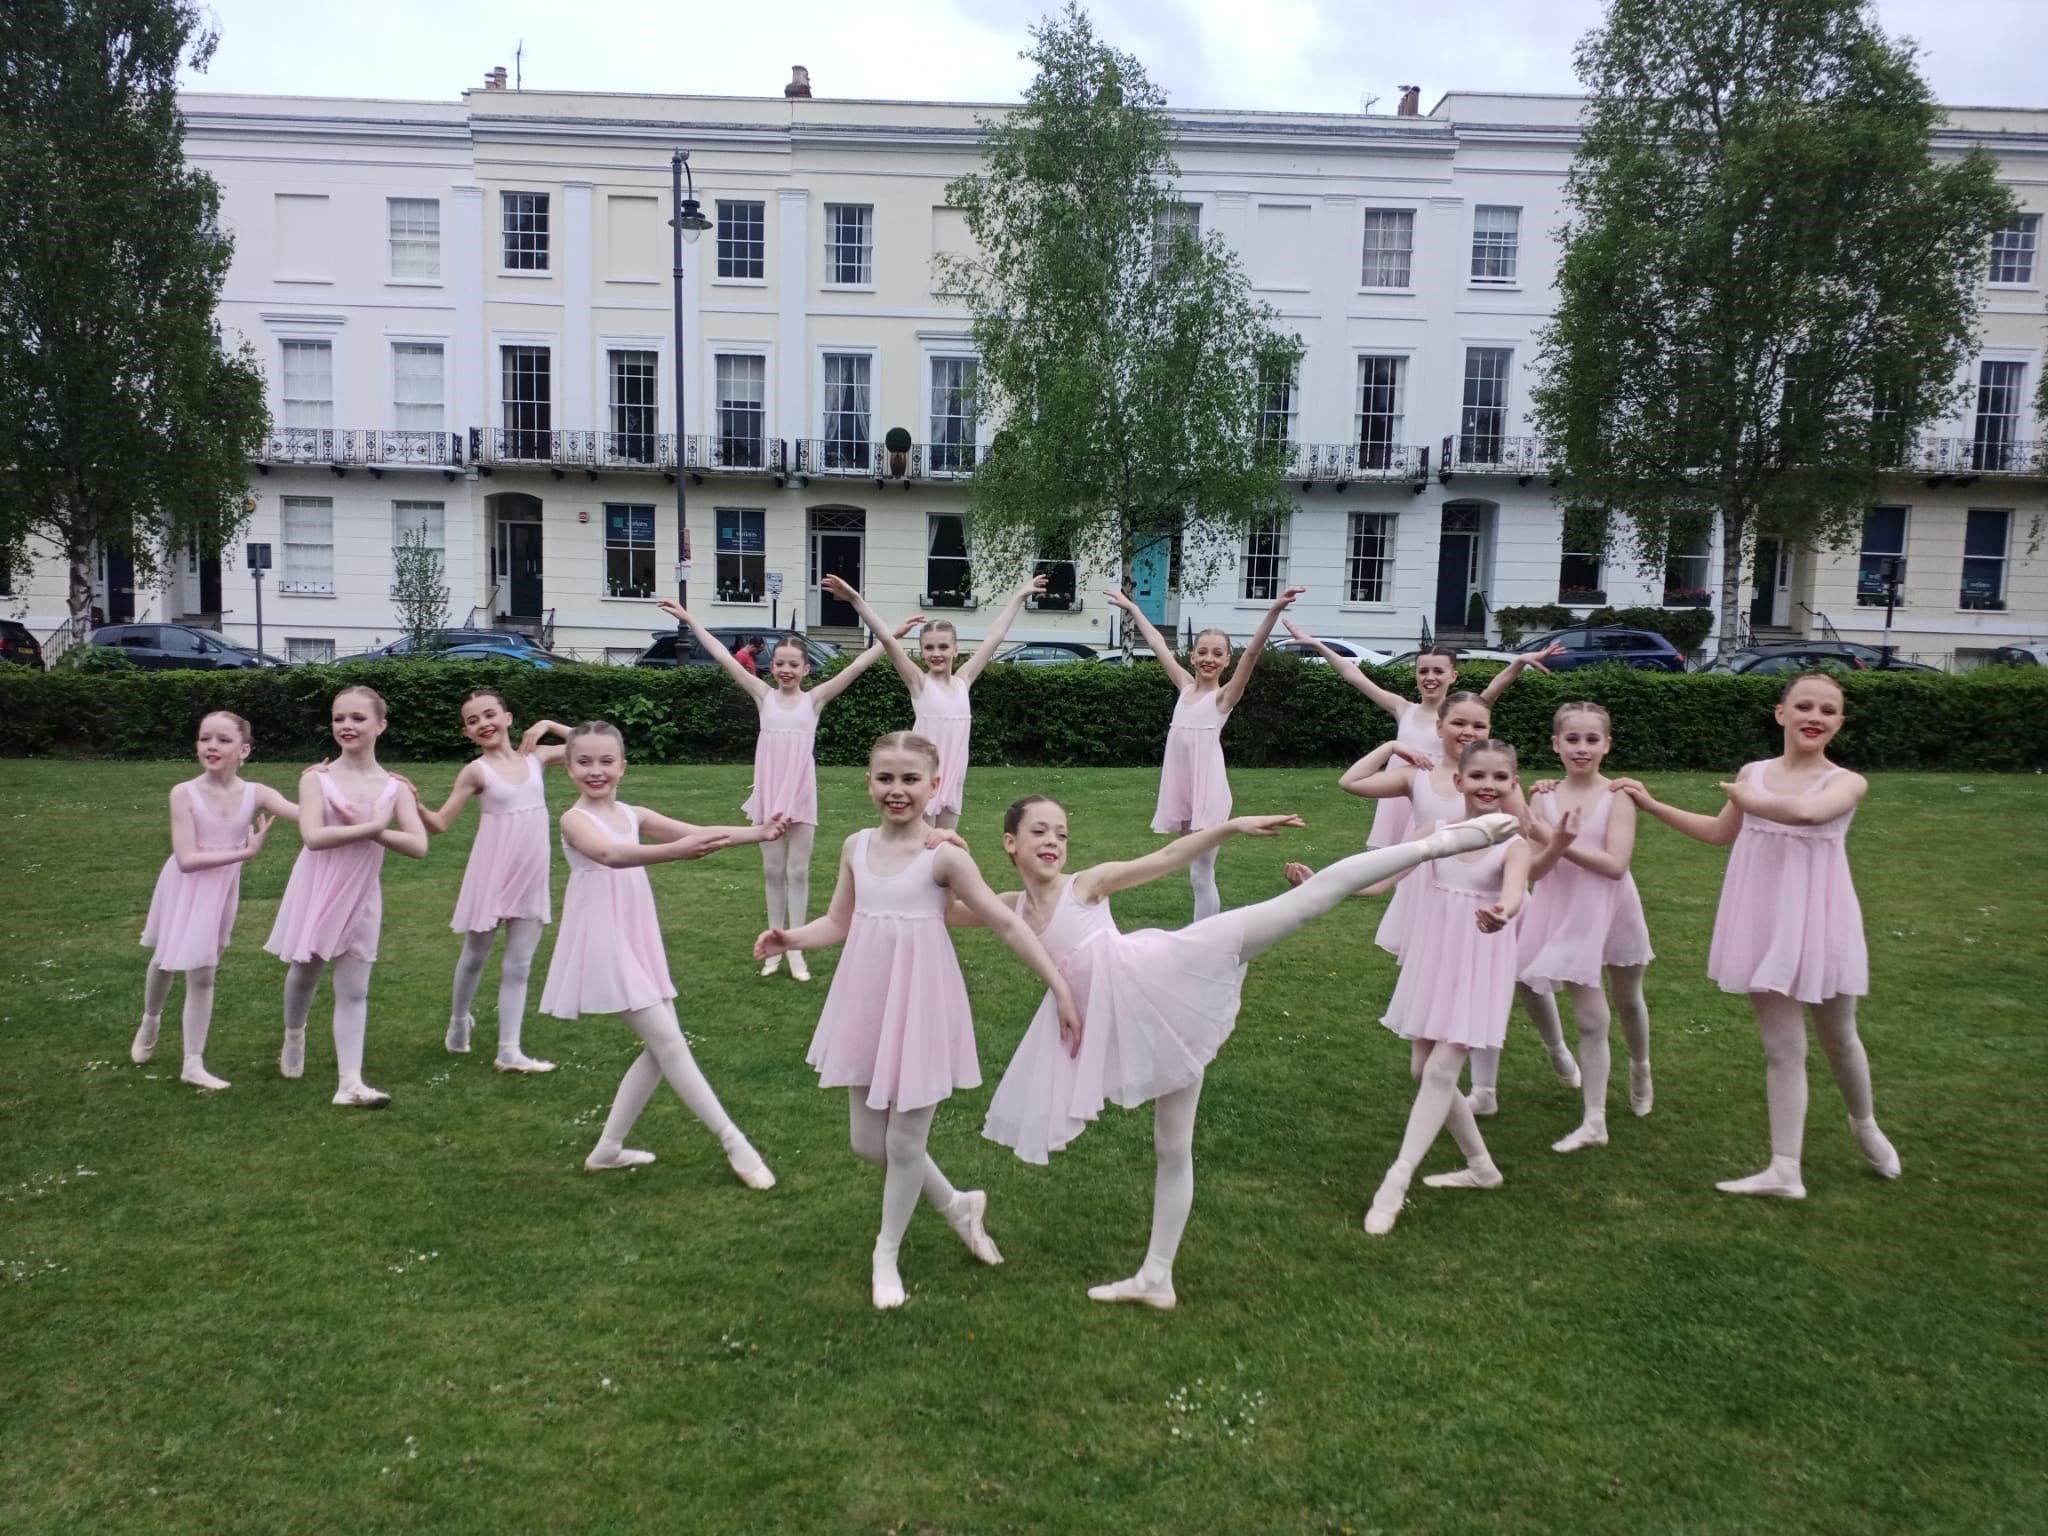 Miss Warner's Under 10 Trophy winning Ballet Group